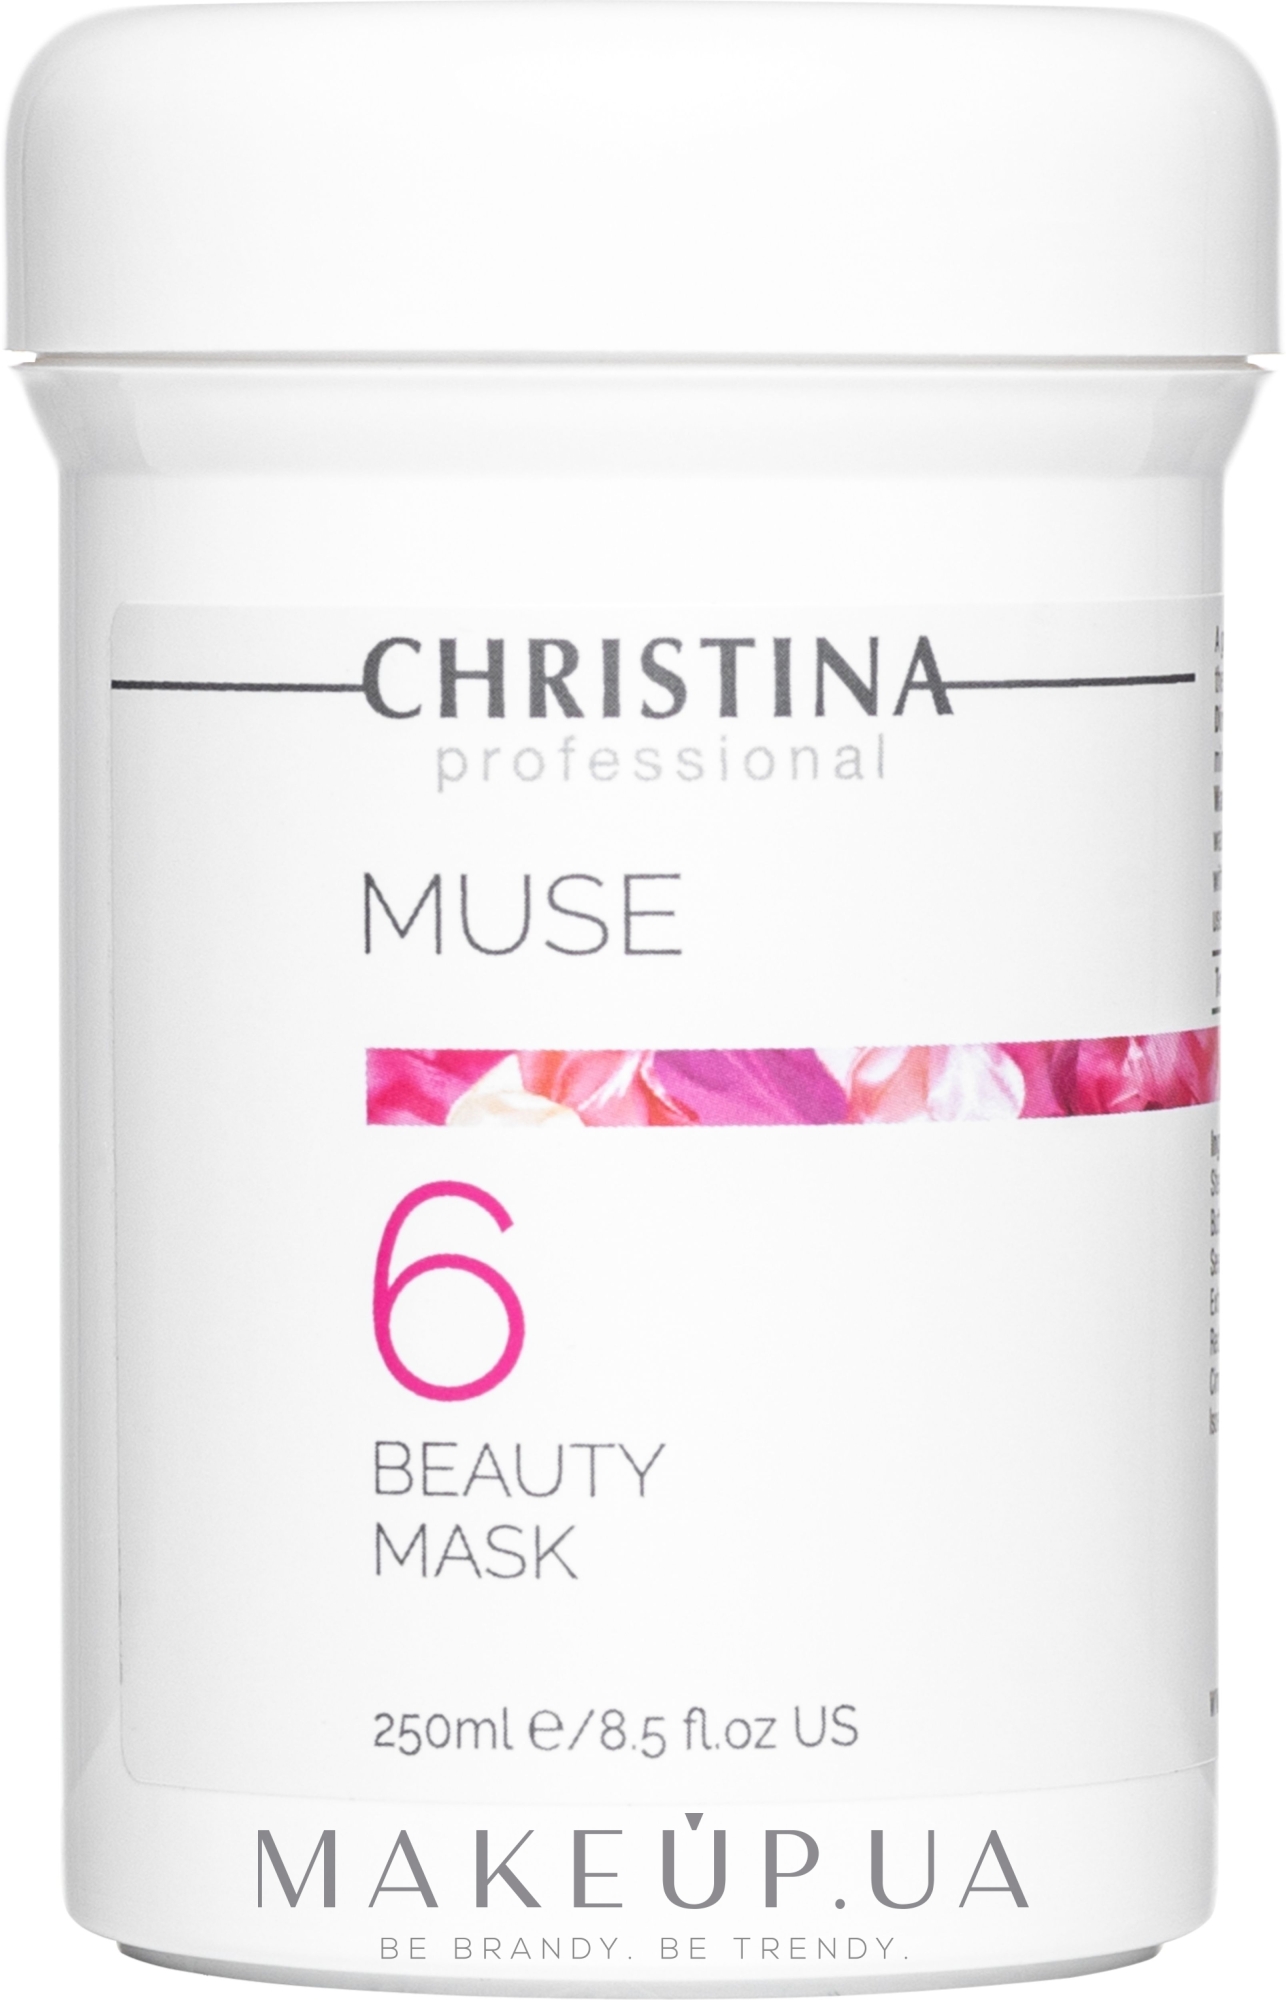 Маска краси з екстрактом троянди - Christina Muse Beauty Mask — фото 250ml